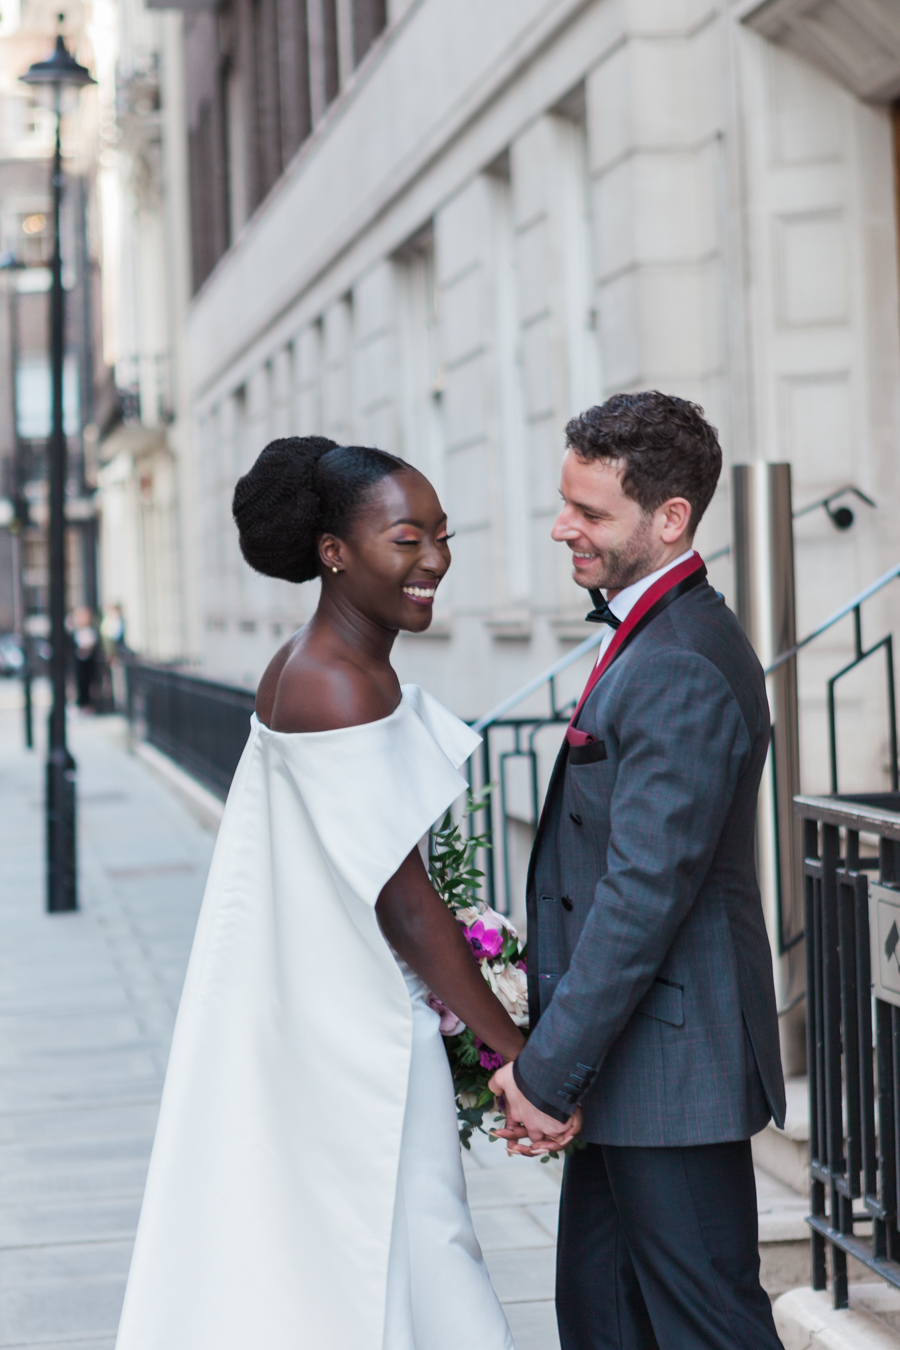 Breathtakingly beautiful - diversity wins in this stunning RSA London wedding editorial! (11)